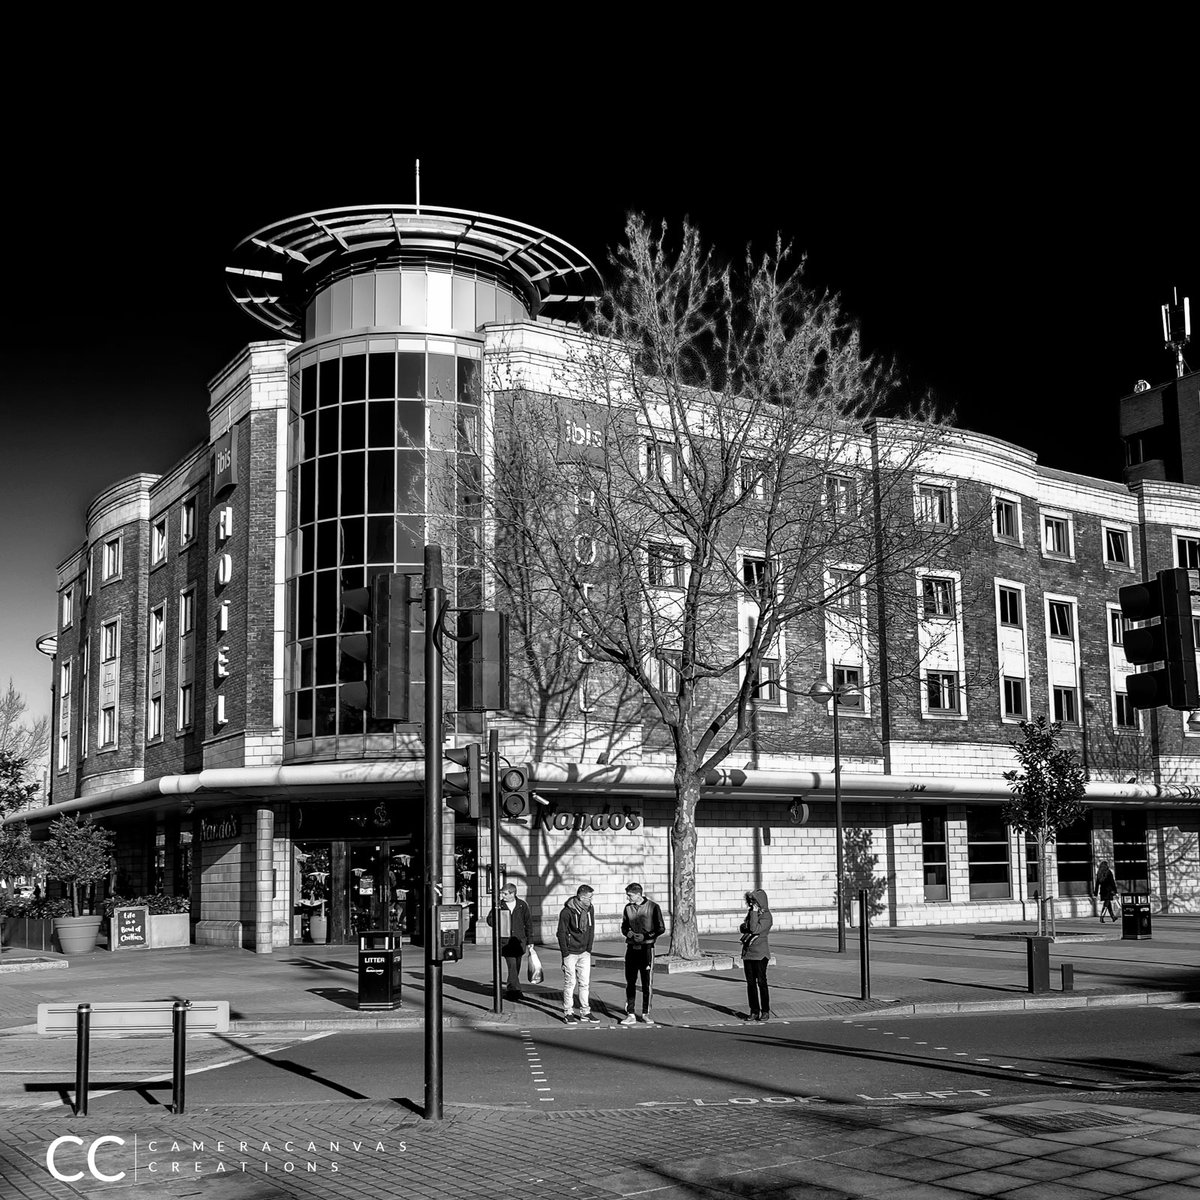 'Urban Life in Monochrome: Pedestrians at the IBIS Hotel Traffic Light'
#UrbanLife #BlackAndWhitePhotography #StreetPhotography #IBISHotel #CityLife #Pedestrians #CrossingTheRoad #Monochrome #Cityscape #trafficlight #London #England #BangladeshiPhotographers